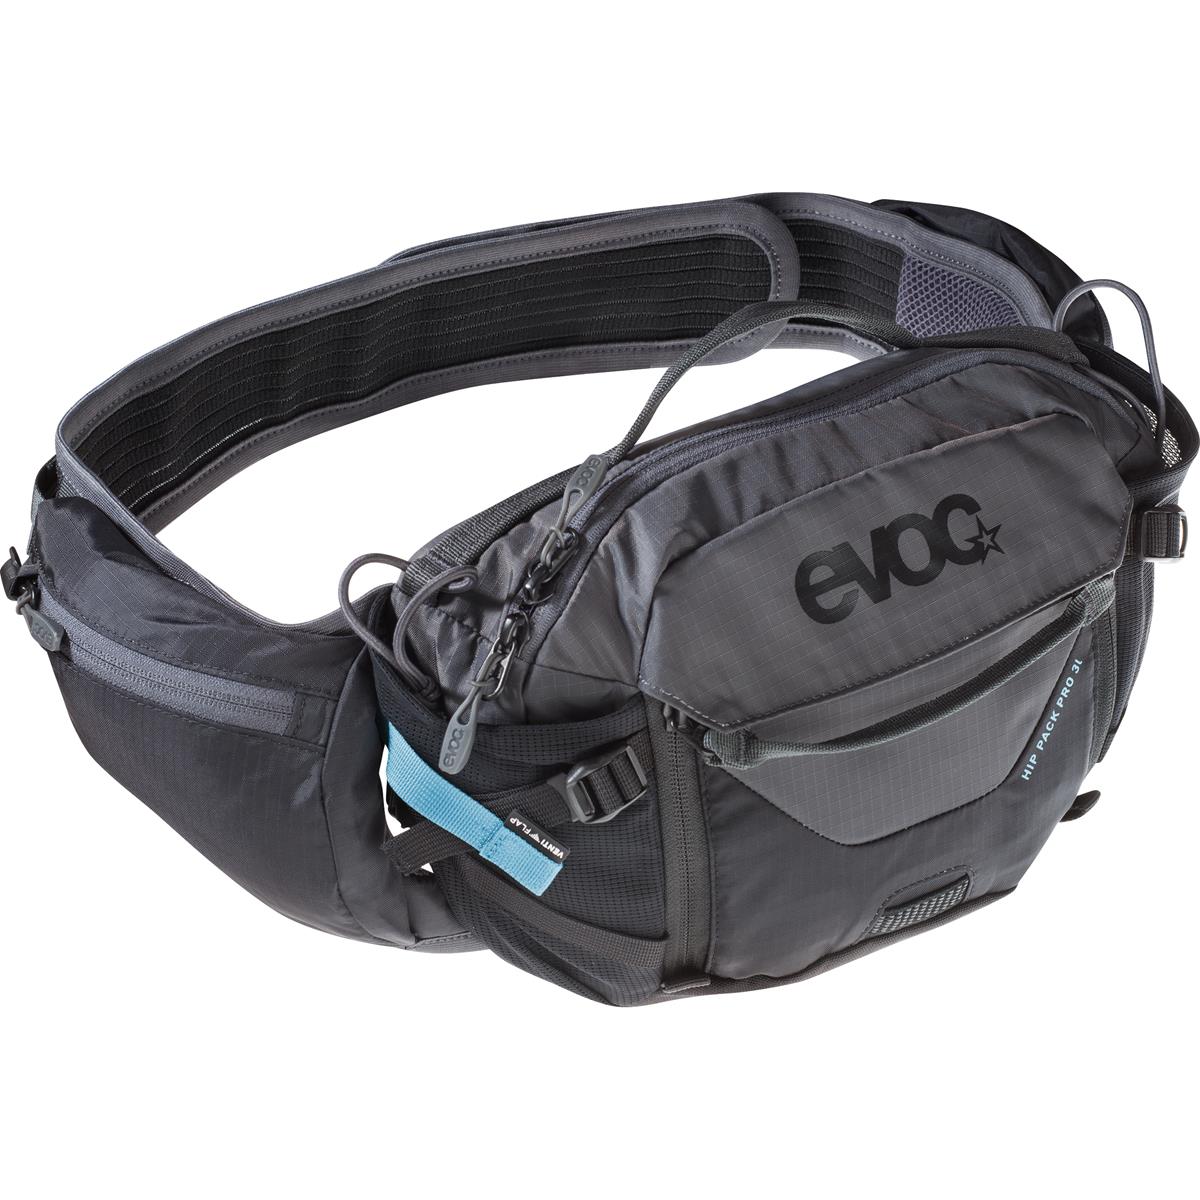 Evoc Hip Pack with Hydration System incl. 1.5L Bladder Hip Pack Pro 3L Black/Carbon Gray